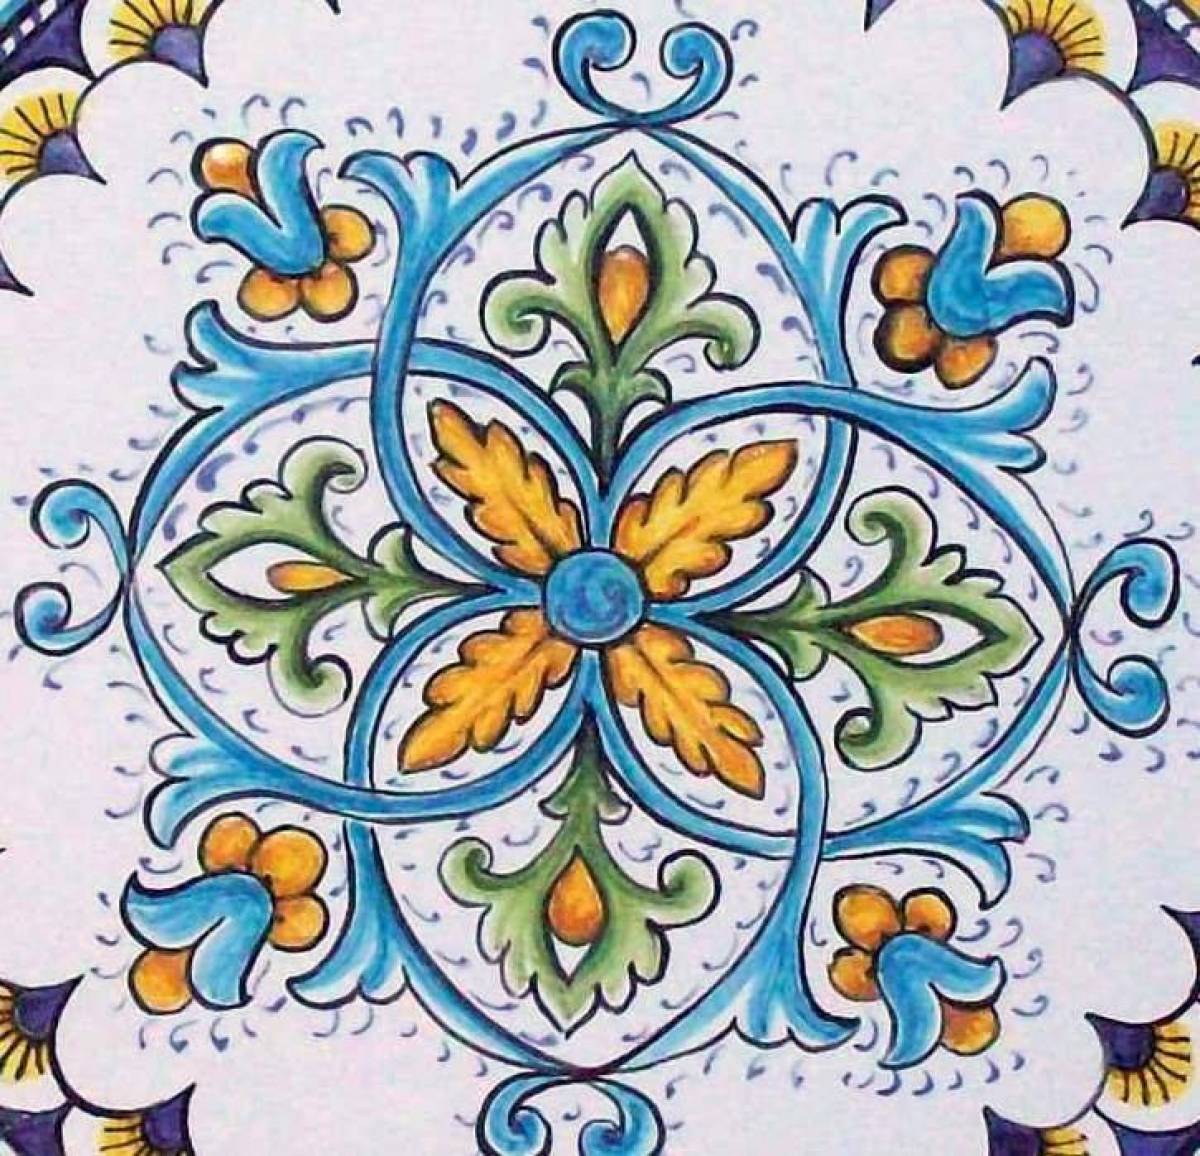 Intricate ceramic tile coloring